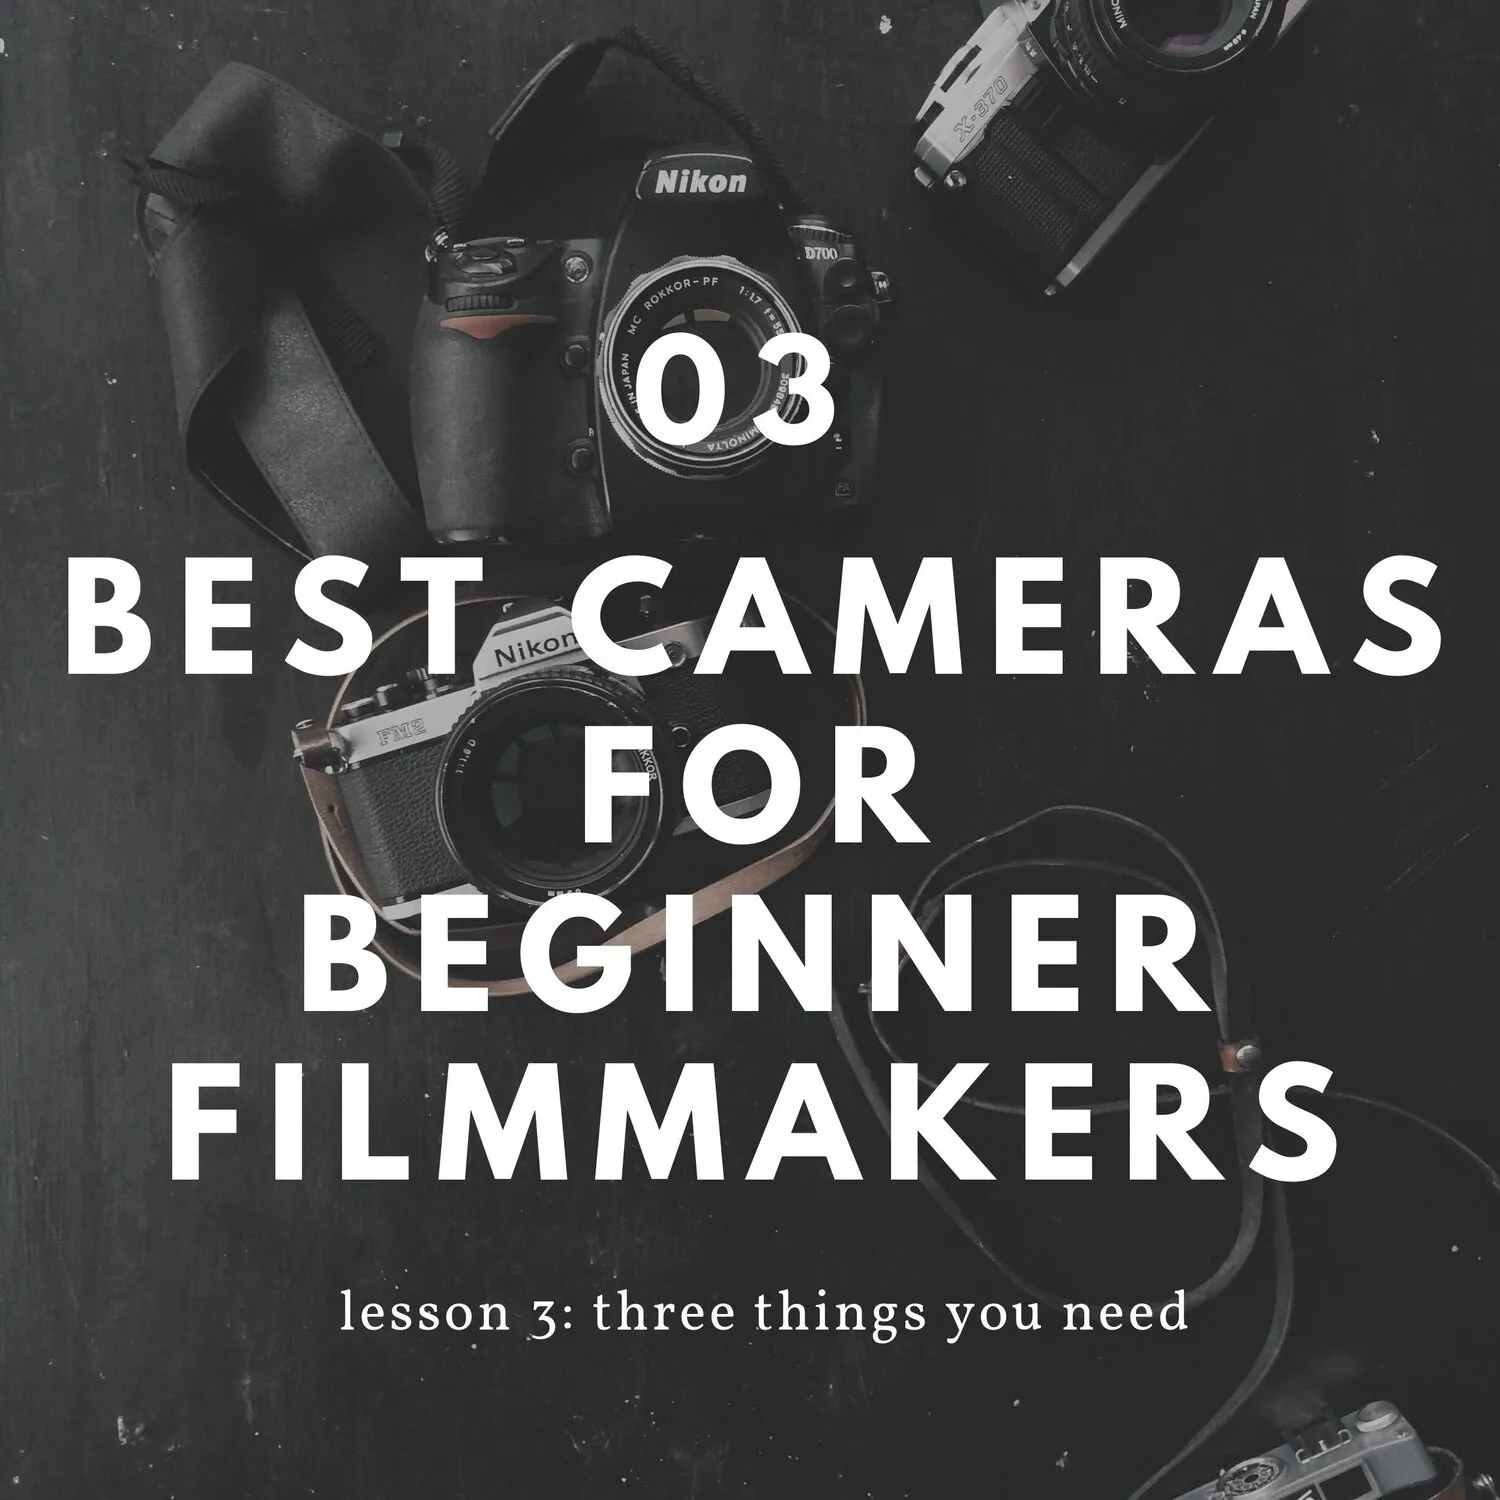 Best Cameras for Beginner Filmmakers